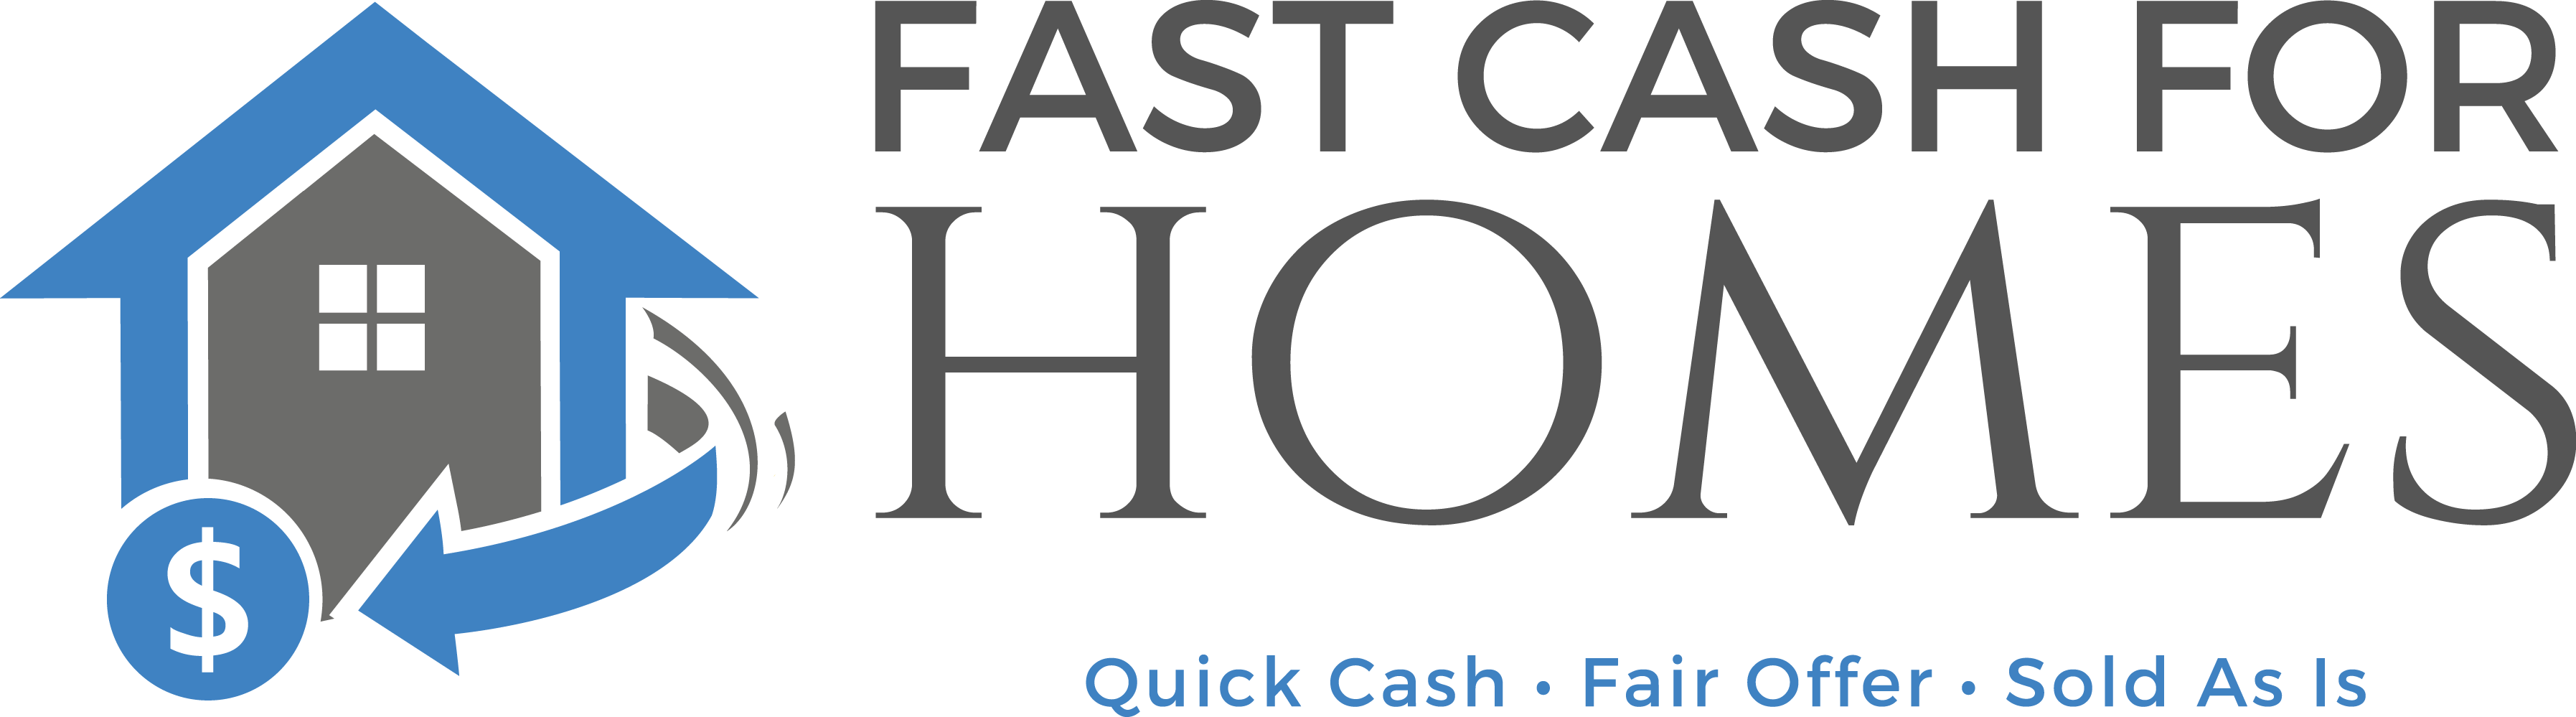 Fast Cash For Homes, LLC logo